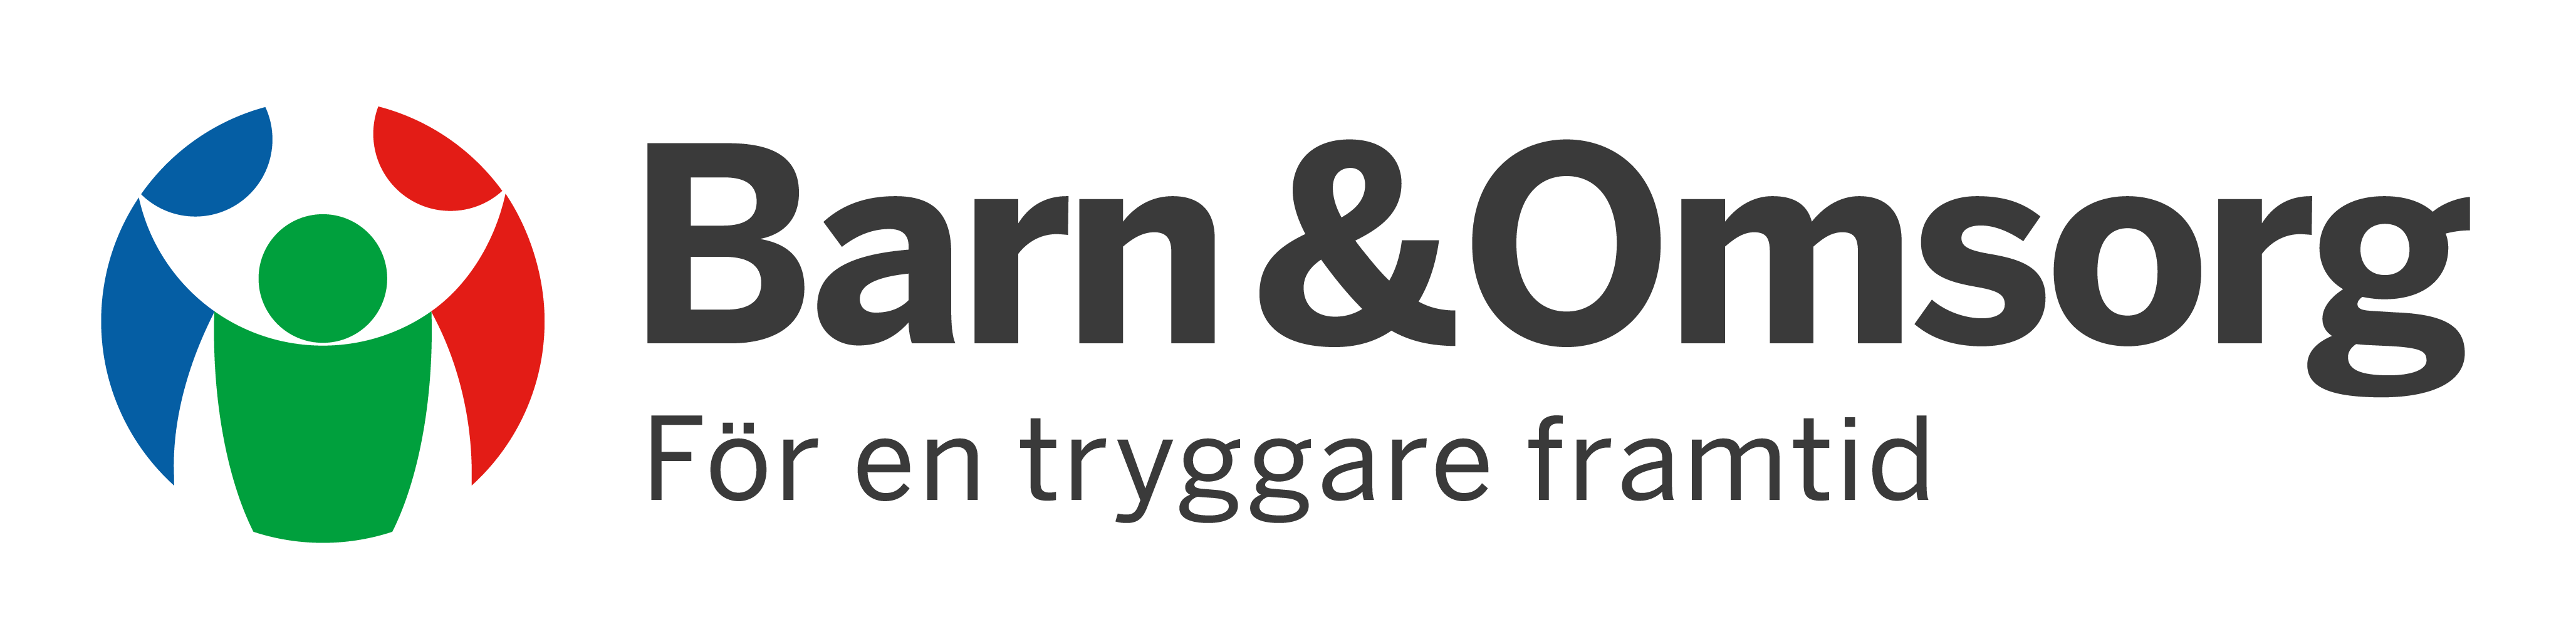 Barn & Omsorg i Sverige logo